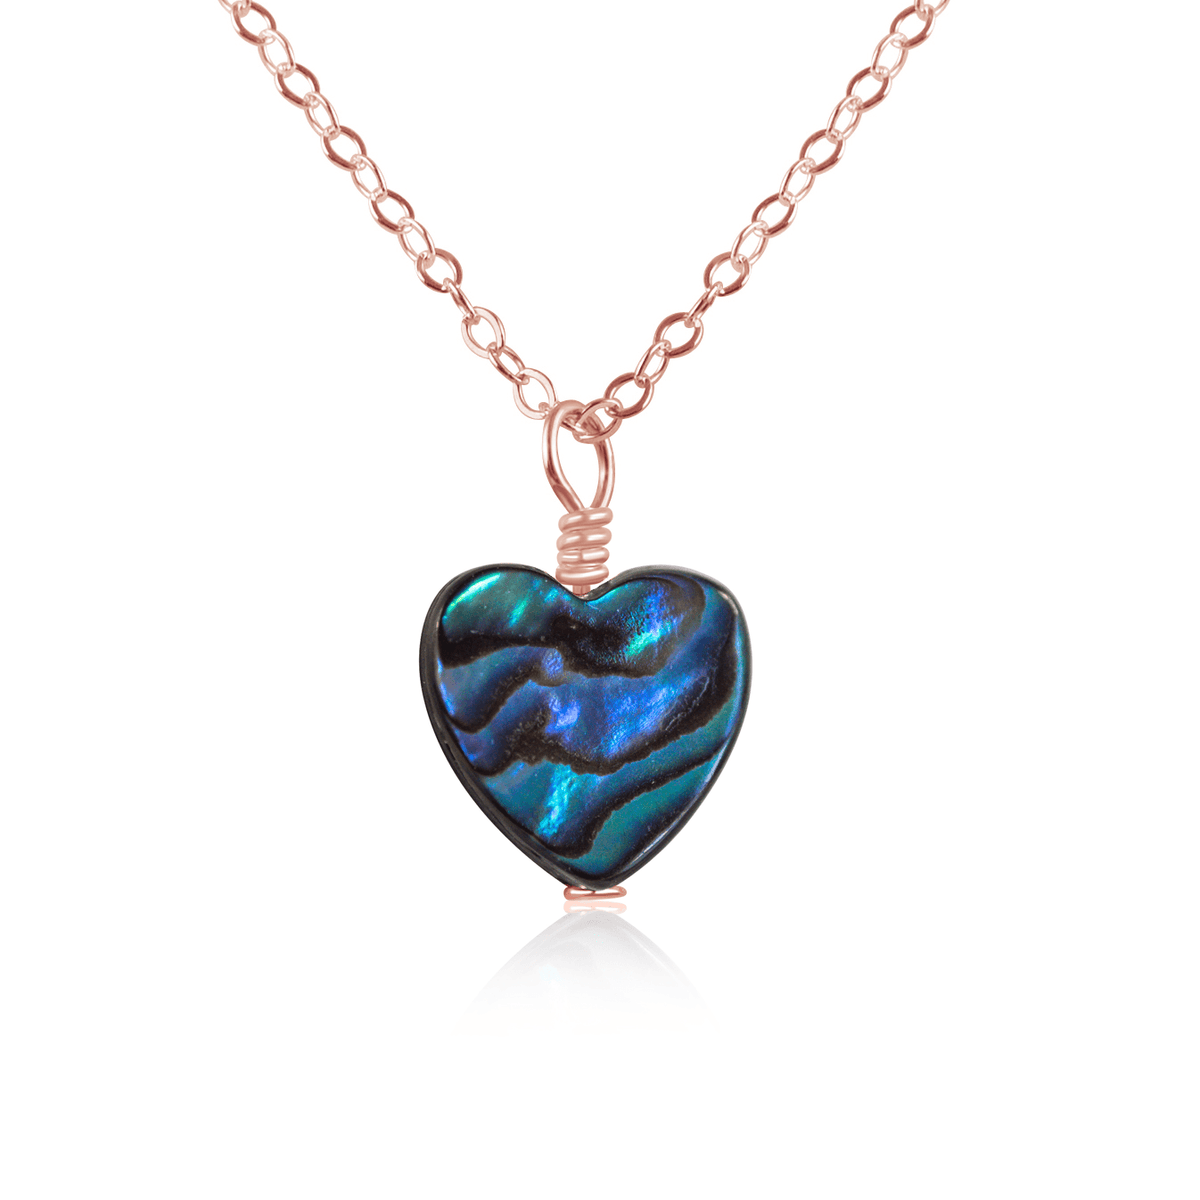 Abalone Shell Heart Pendant Necklace - Abalone Shell Heart Pendant Necklace - 14k Rose Gold Fill / Cable - Luna Tide Handmade Crystal Jewellery